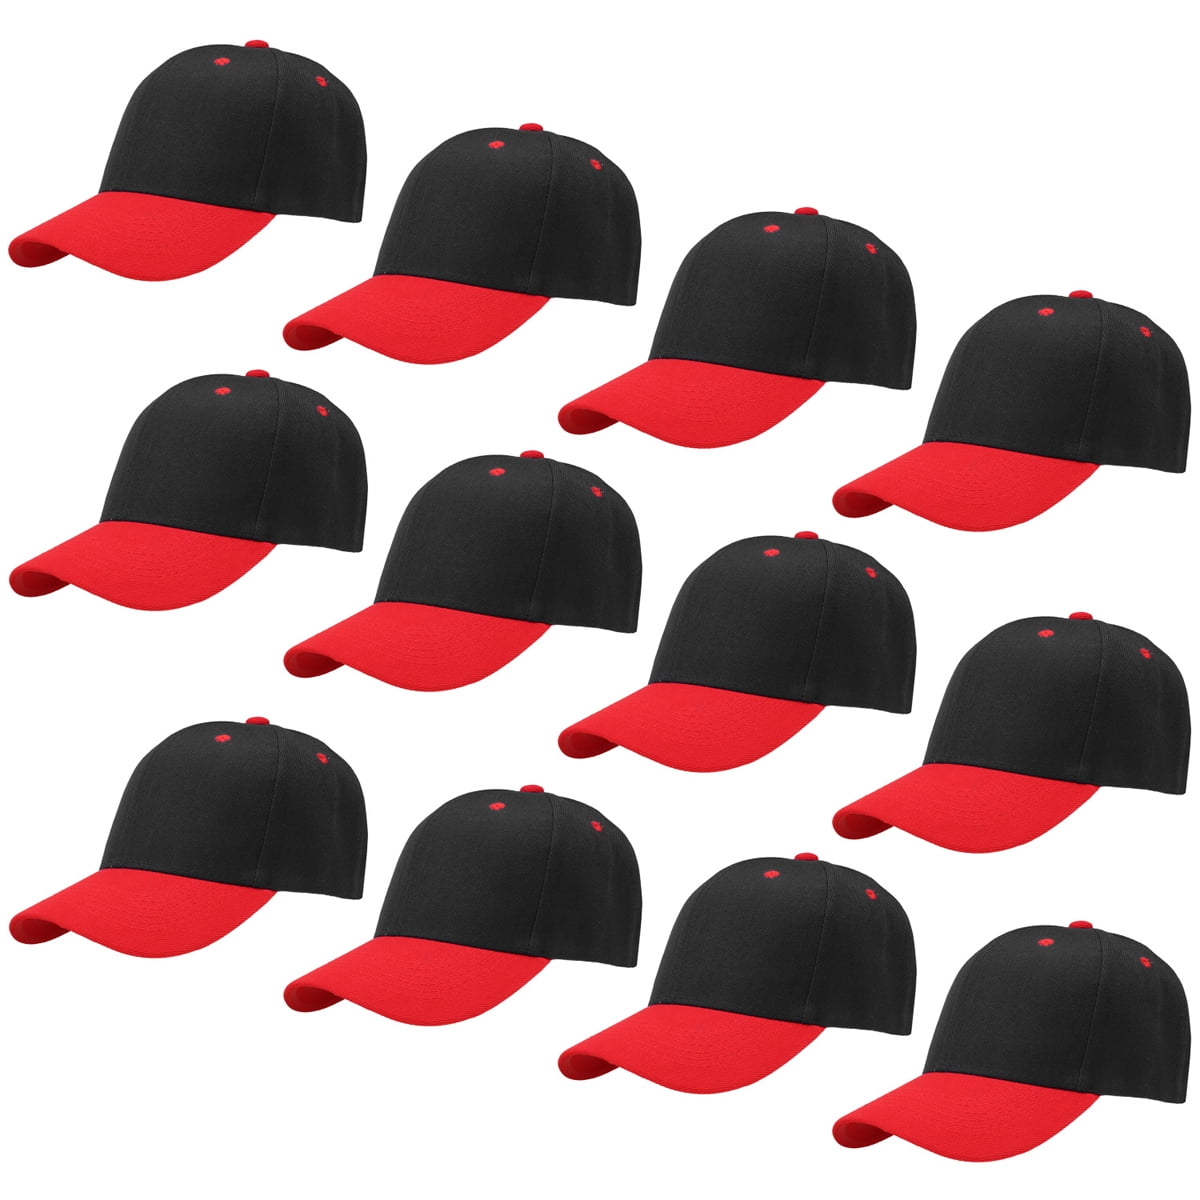 Falari Wholesale 12-Pack Baseball Cap Adjustable Size Plain Blank Solid Color Black/Red